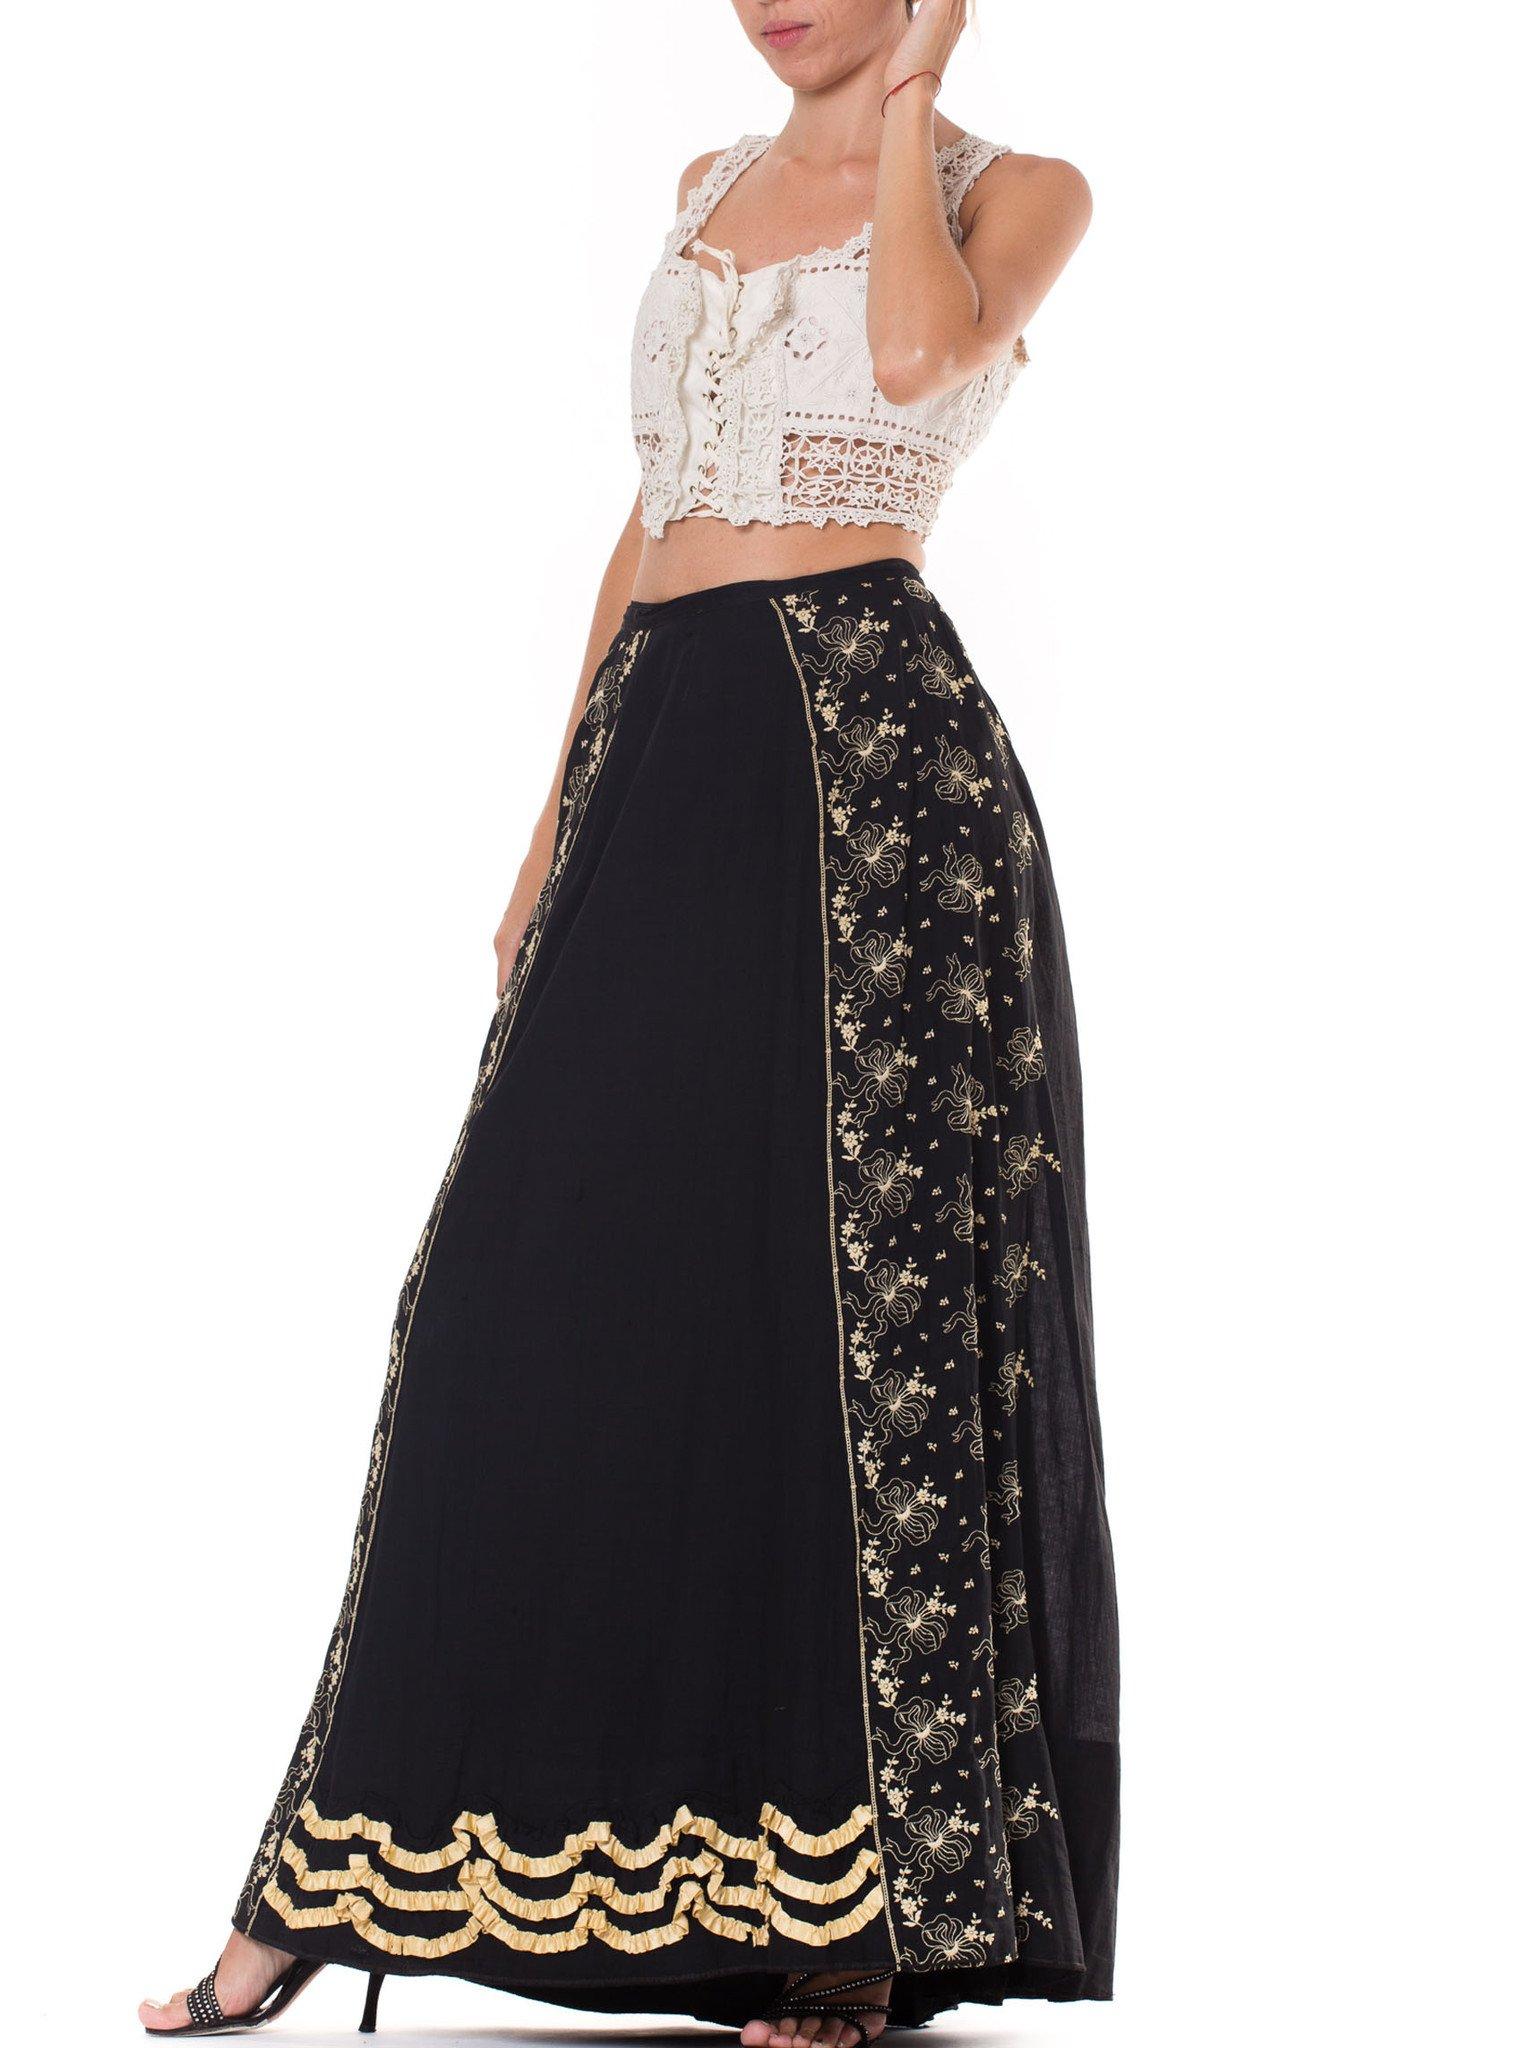 black victorian skirt